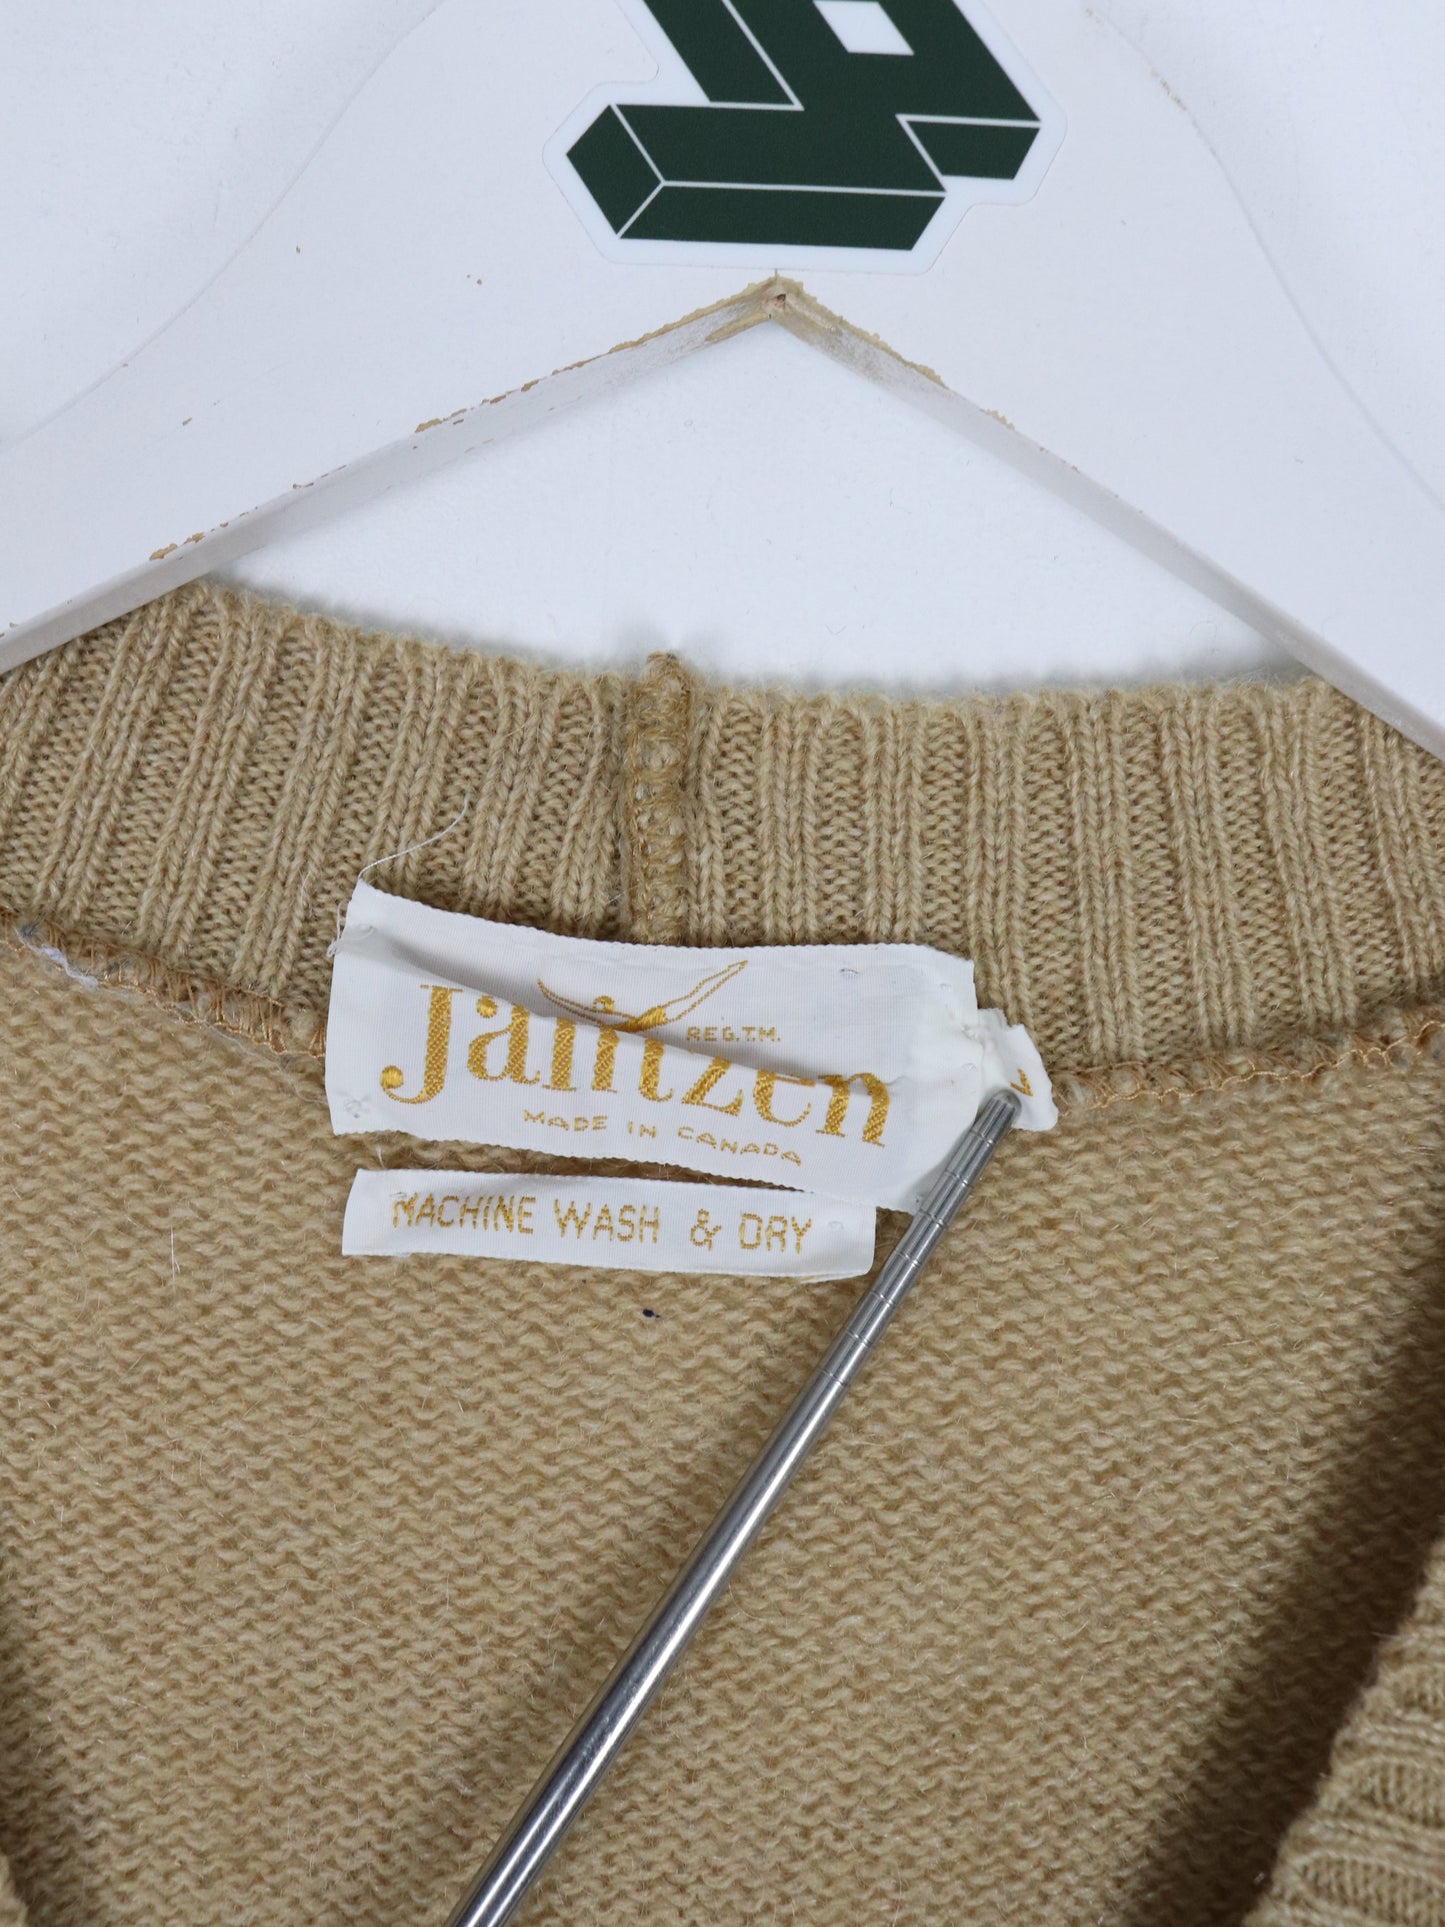 Vintage Jantzen Sweater Mens Large Beige Knit Cardigan